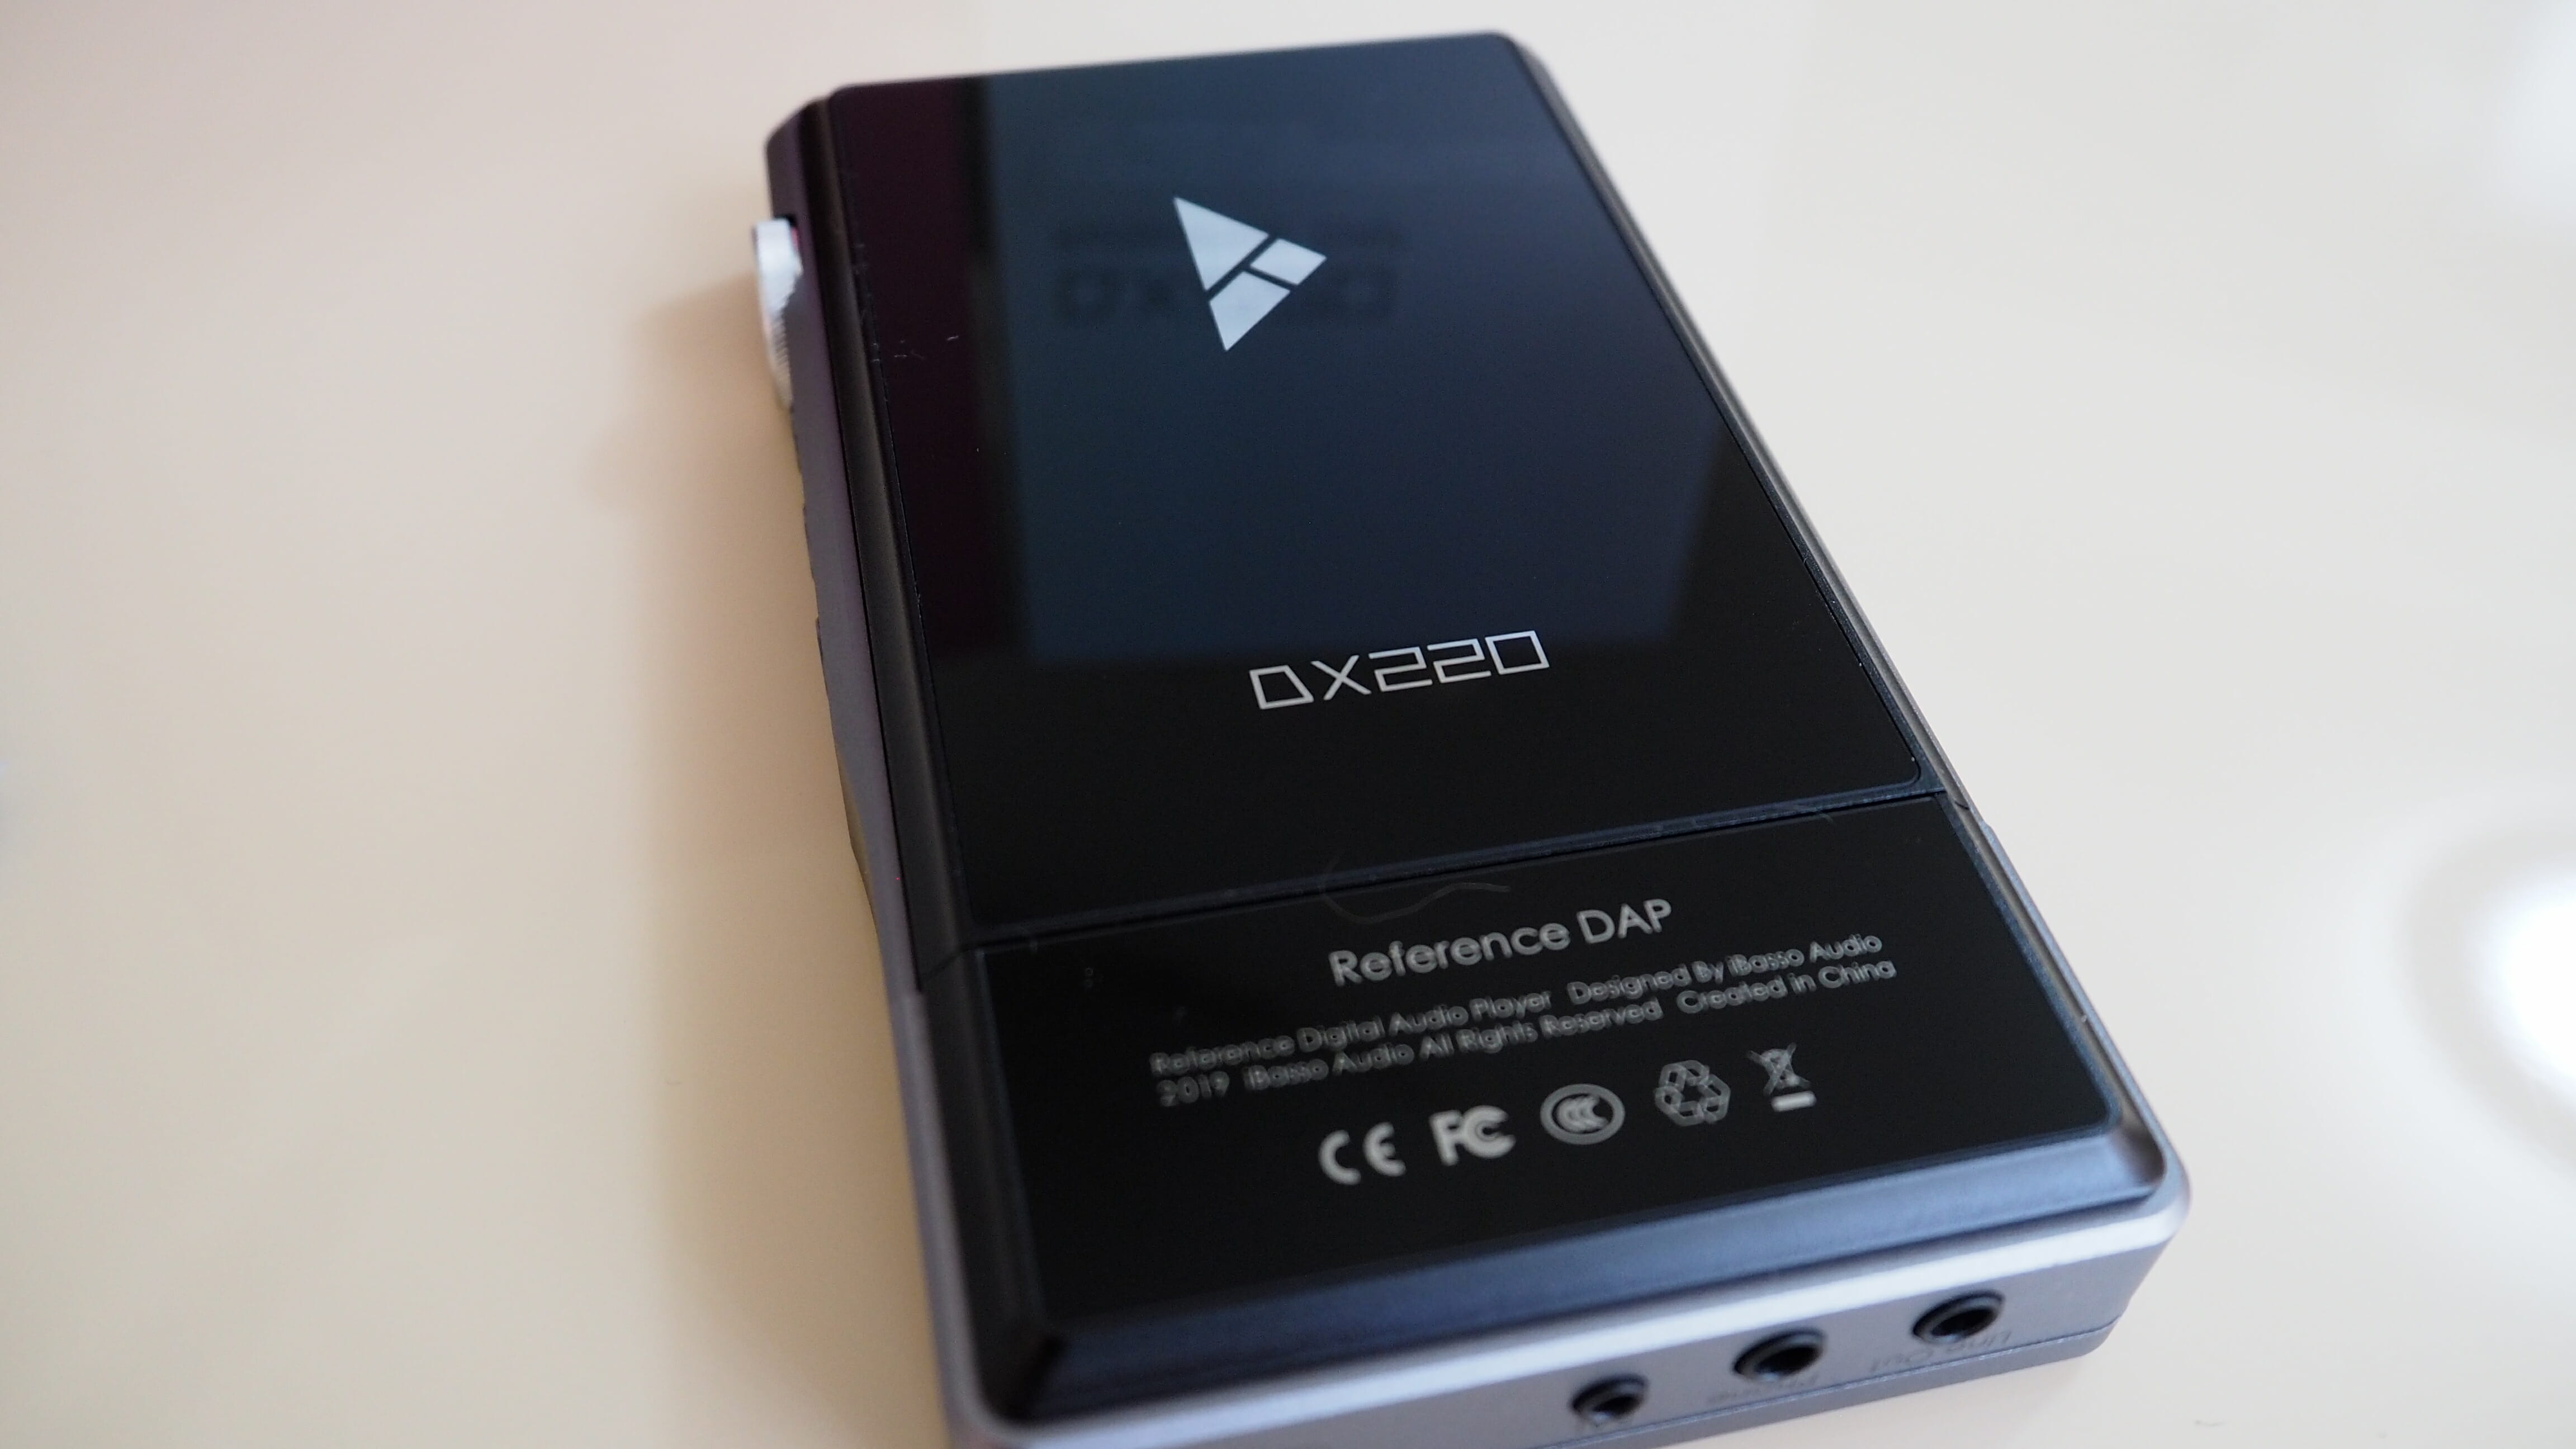 iBasso DX220 DAP